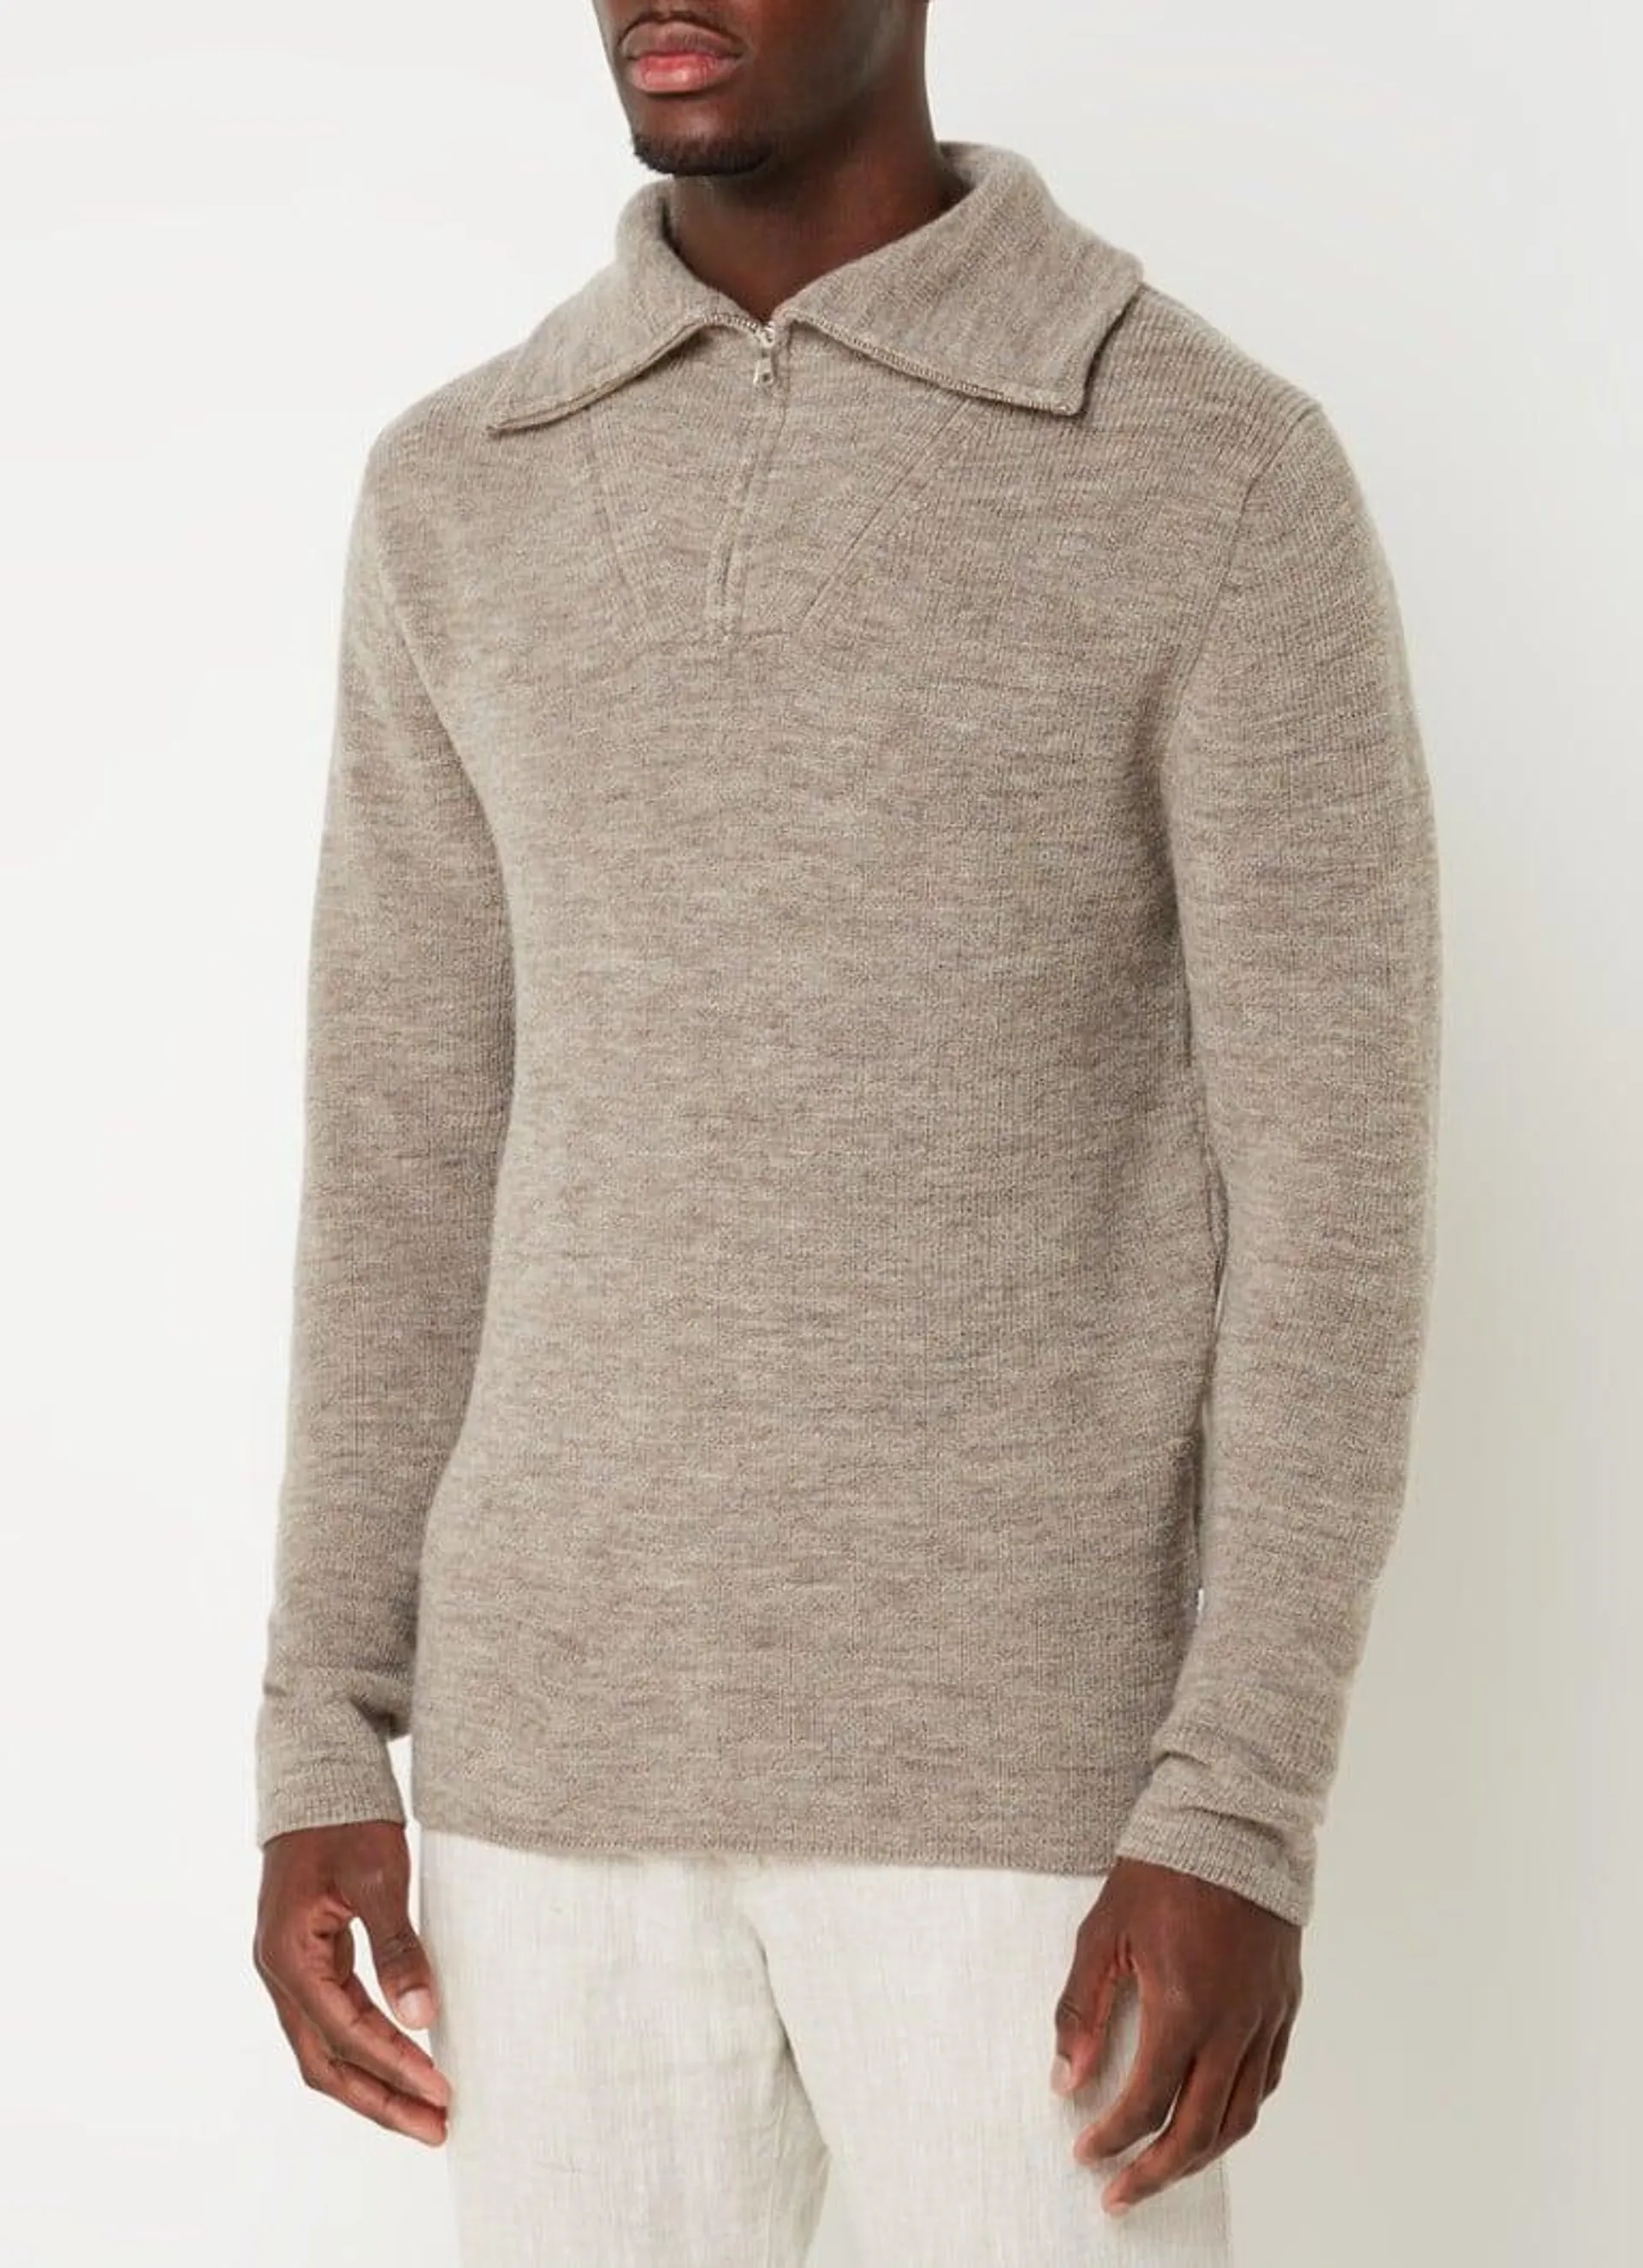 Carl fijngebreide sweater met halve rits van wol